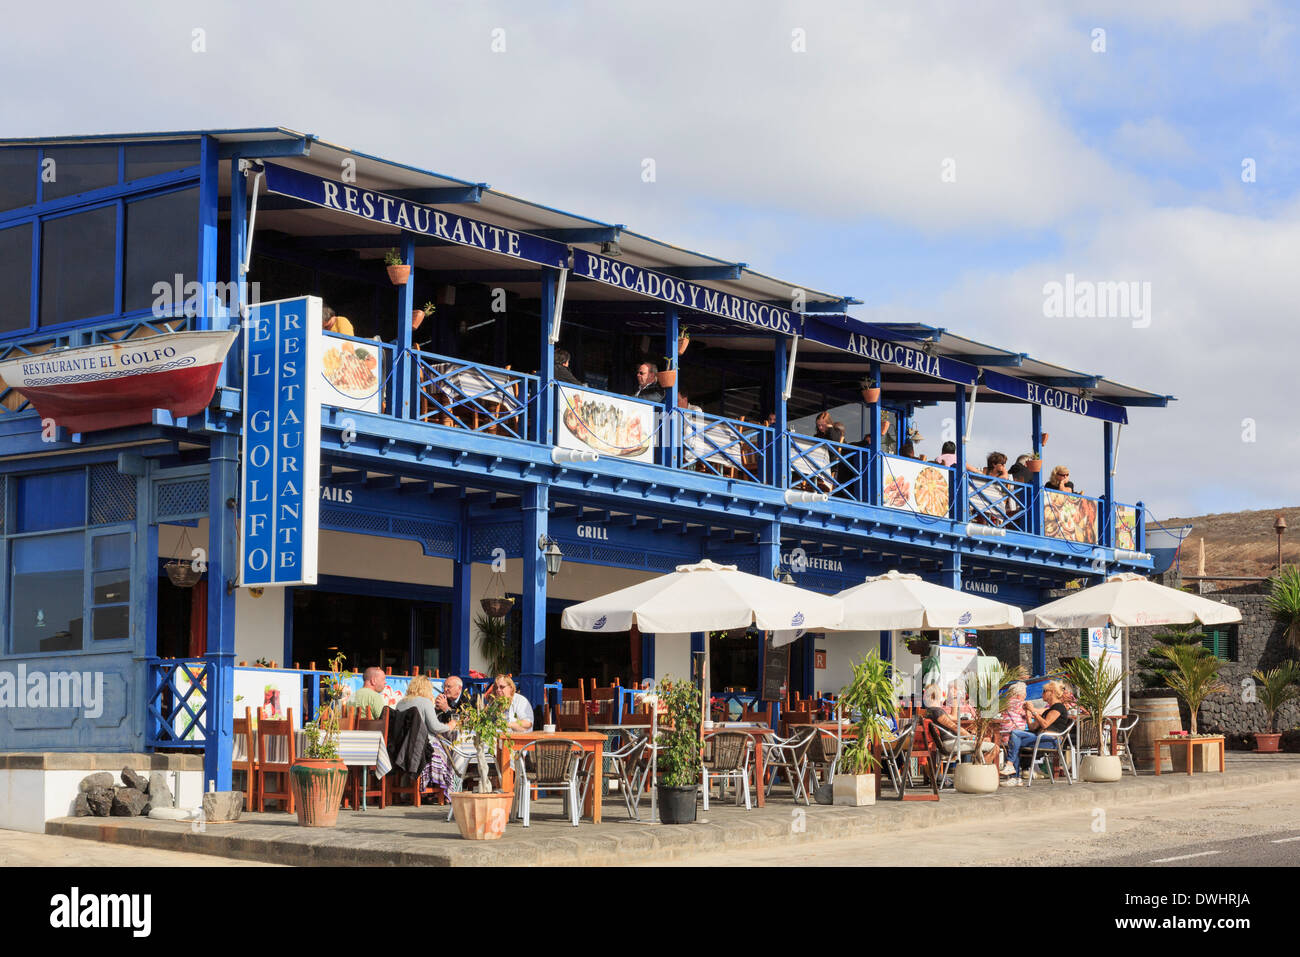 Les gens à l'extérieur manger un restaurant de fruits de mer en El Golfo, Lanzarote, Canaries, Espagne, Europe. Banque D'Images